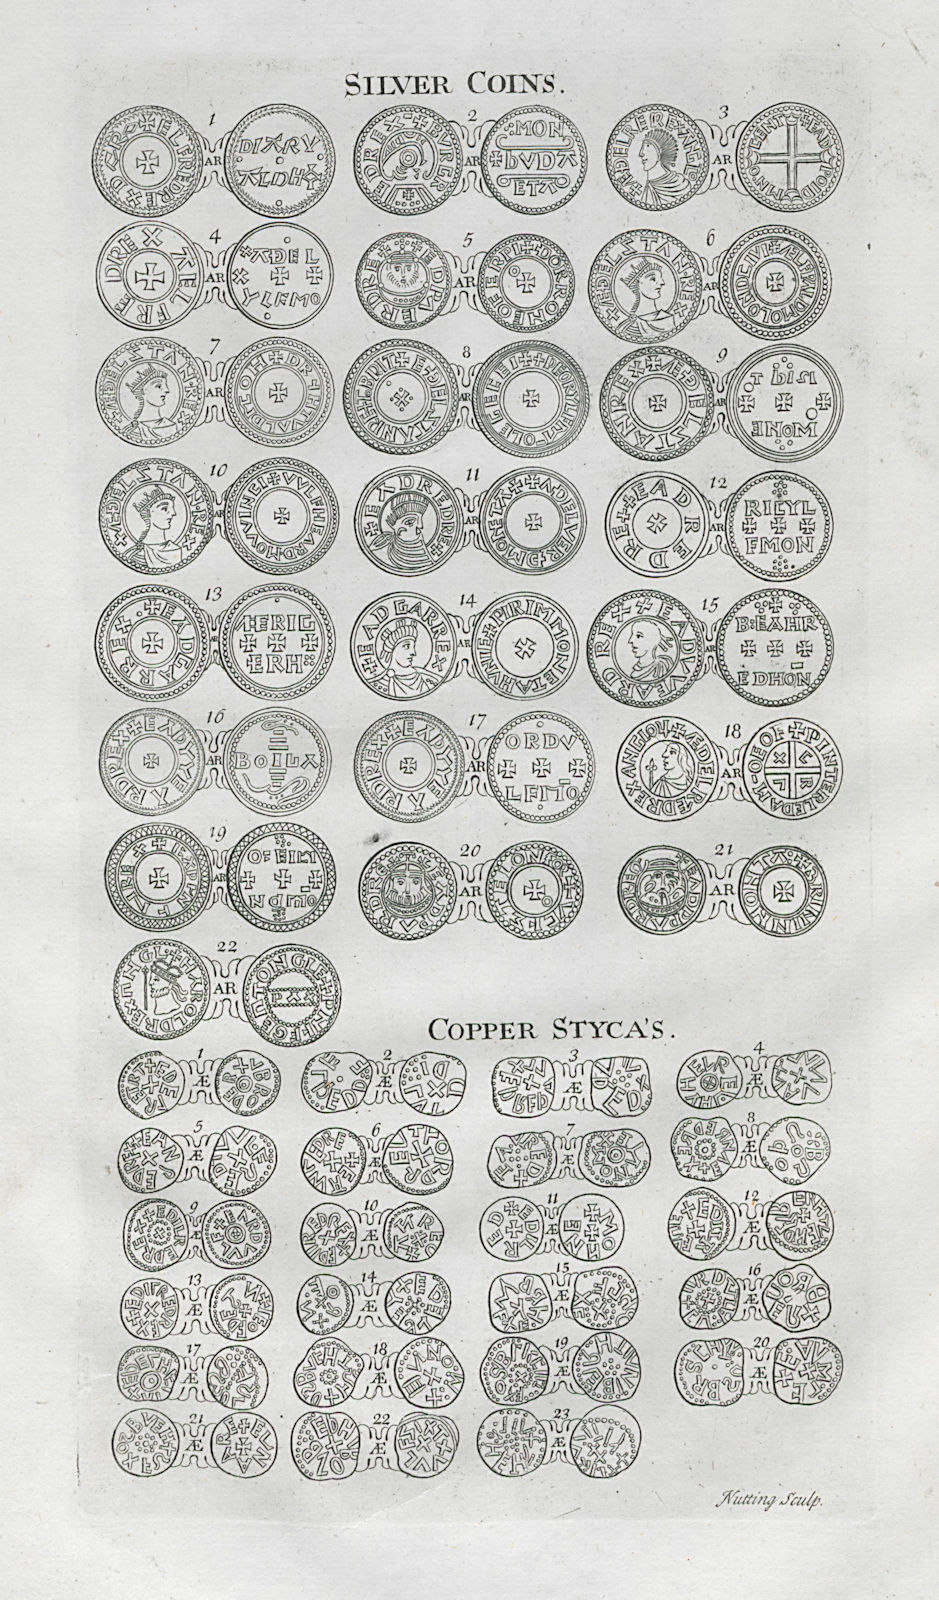 Saxon British Coins. 'SILVER COINS. COPPER STYCAS' from Camden's Britannia 1722